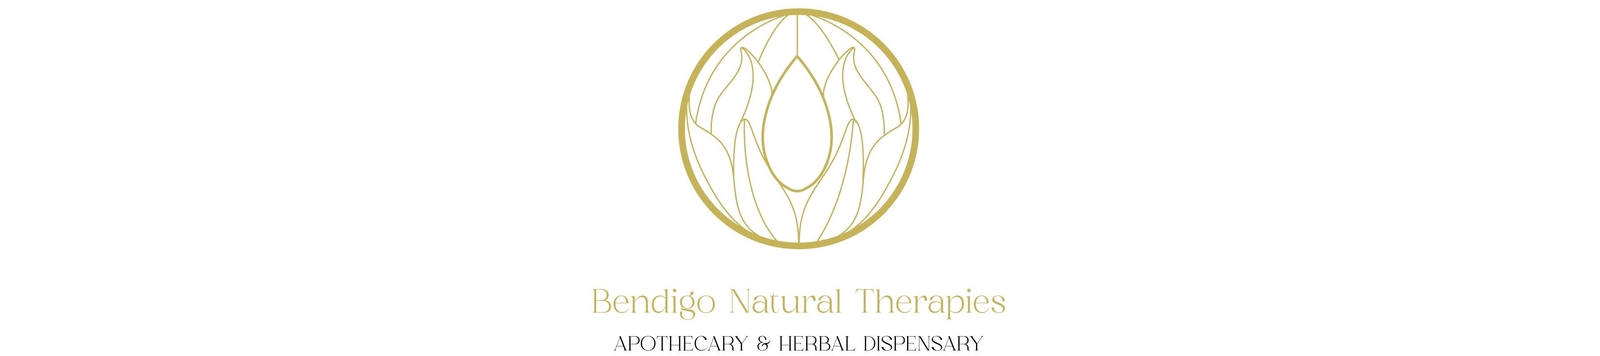 Bendigo Natural Therapies Apothecary & Herbal